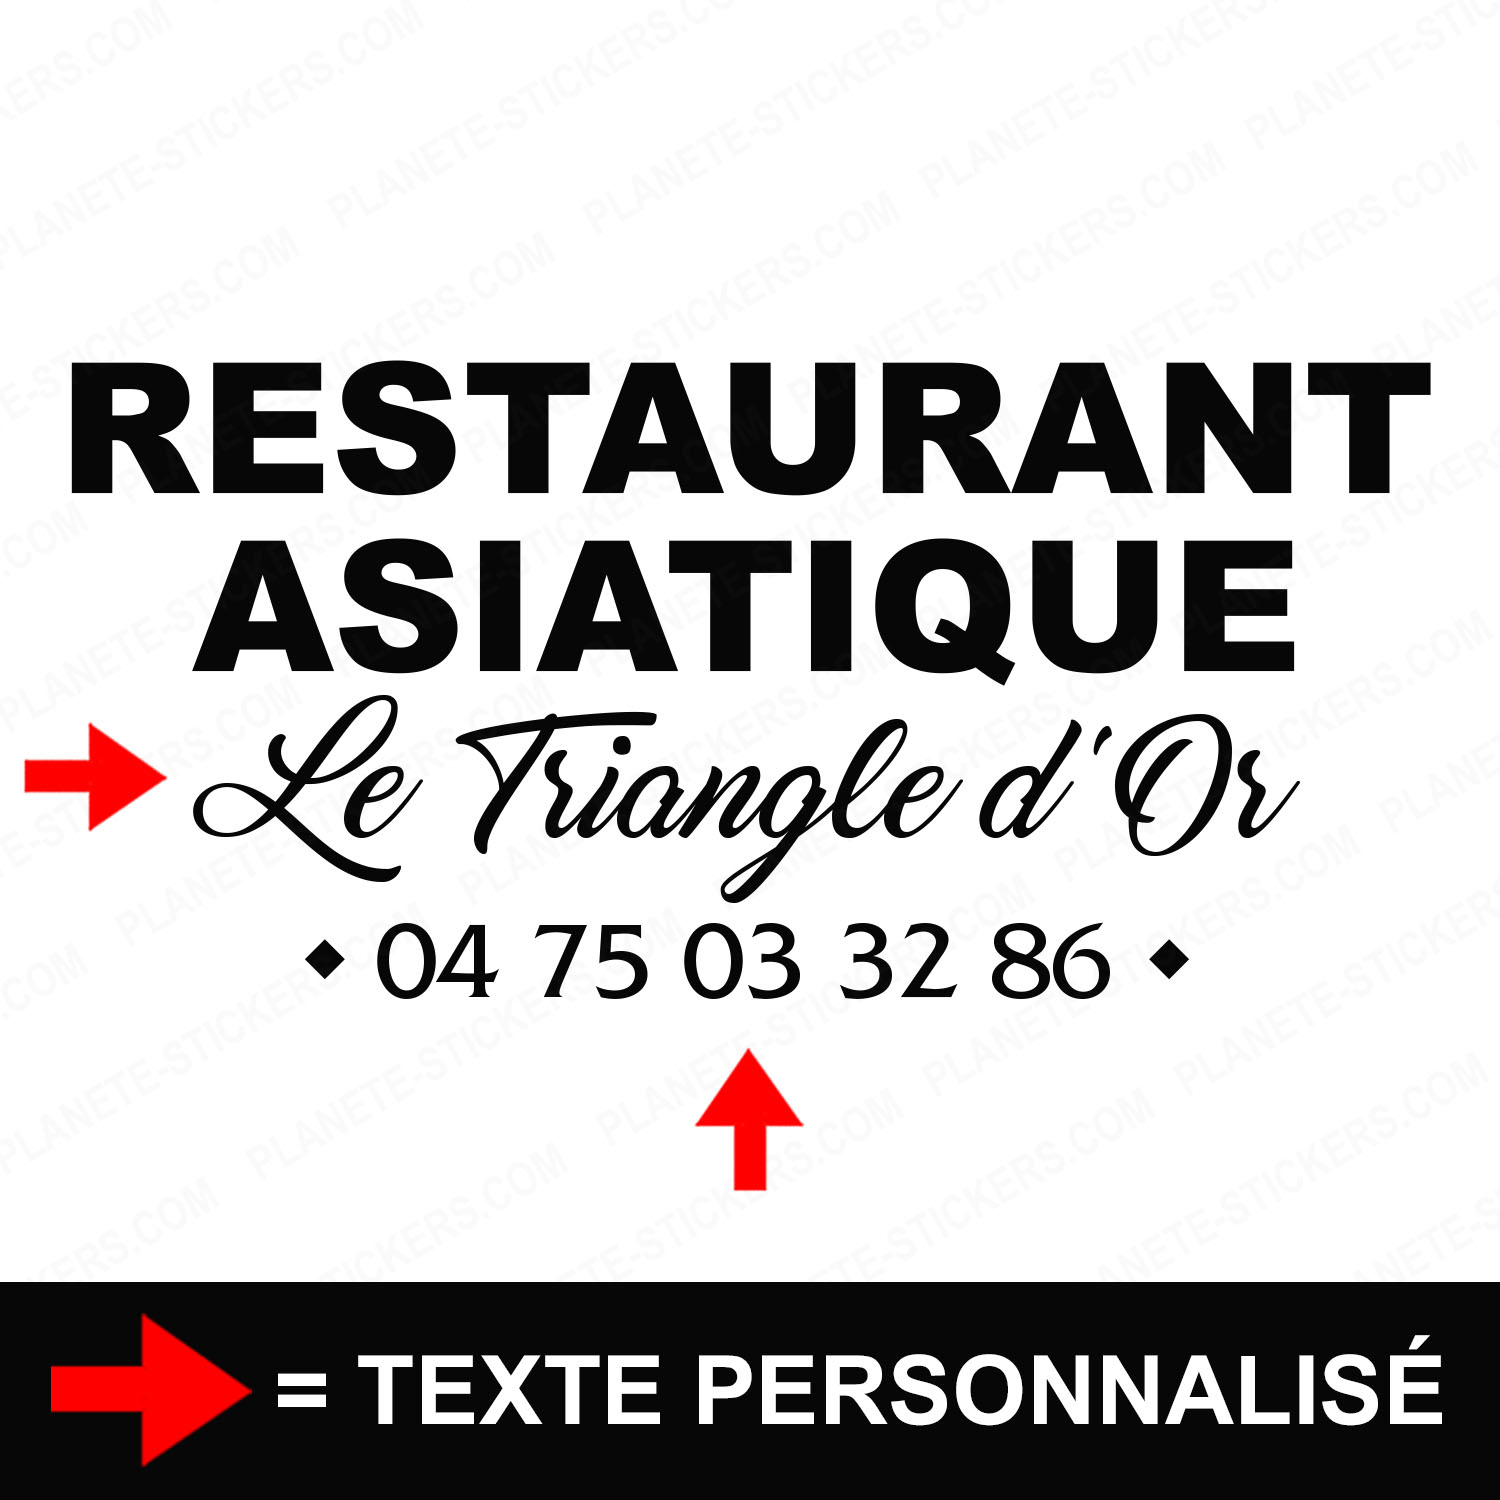 ref31restaurantvitrine-stickers-restaurant-asiatique-vitrine-restaurant-sticker-personnalisé-autocollant-pro-restaurateur-vitre-resto-professionnel-logo-personnalisable-2